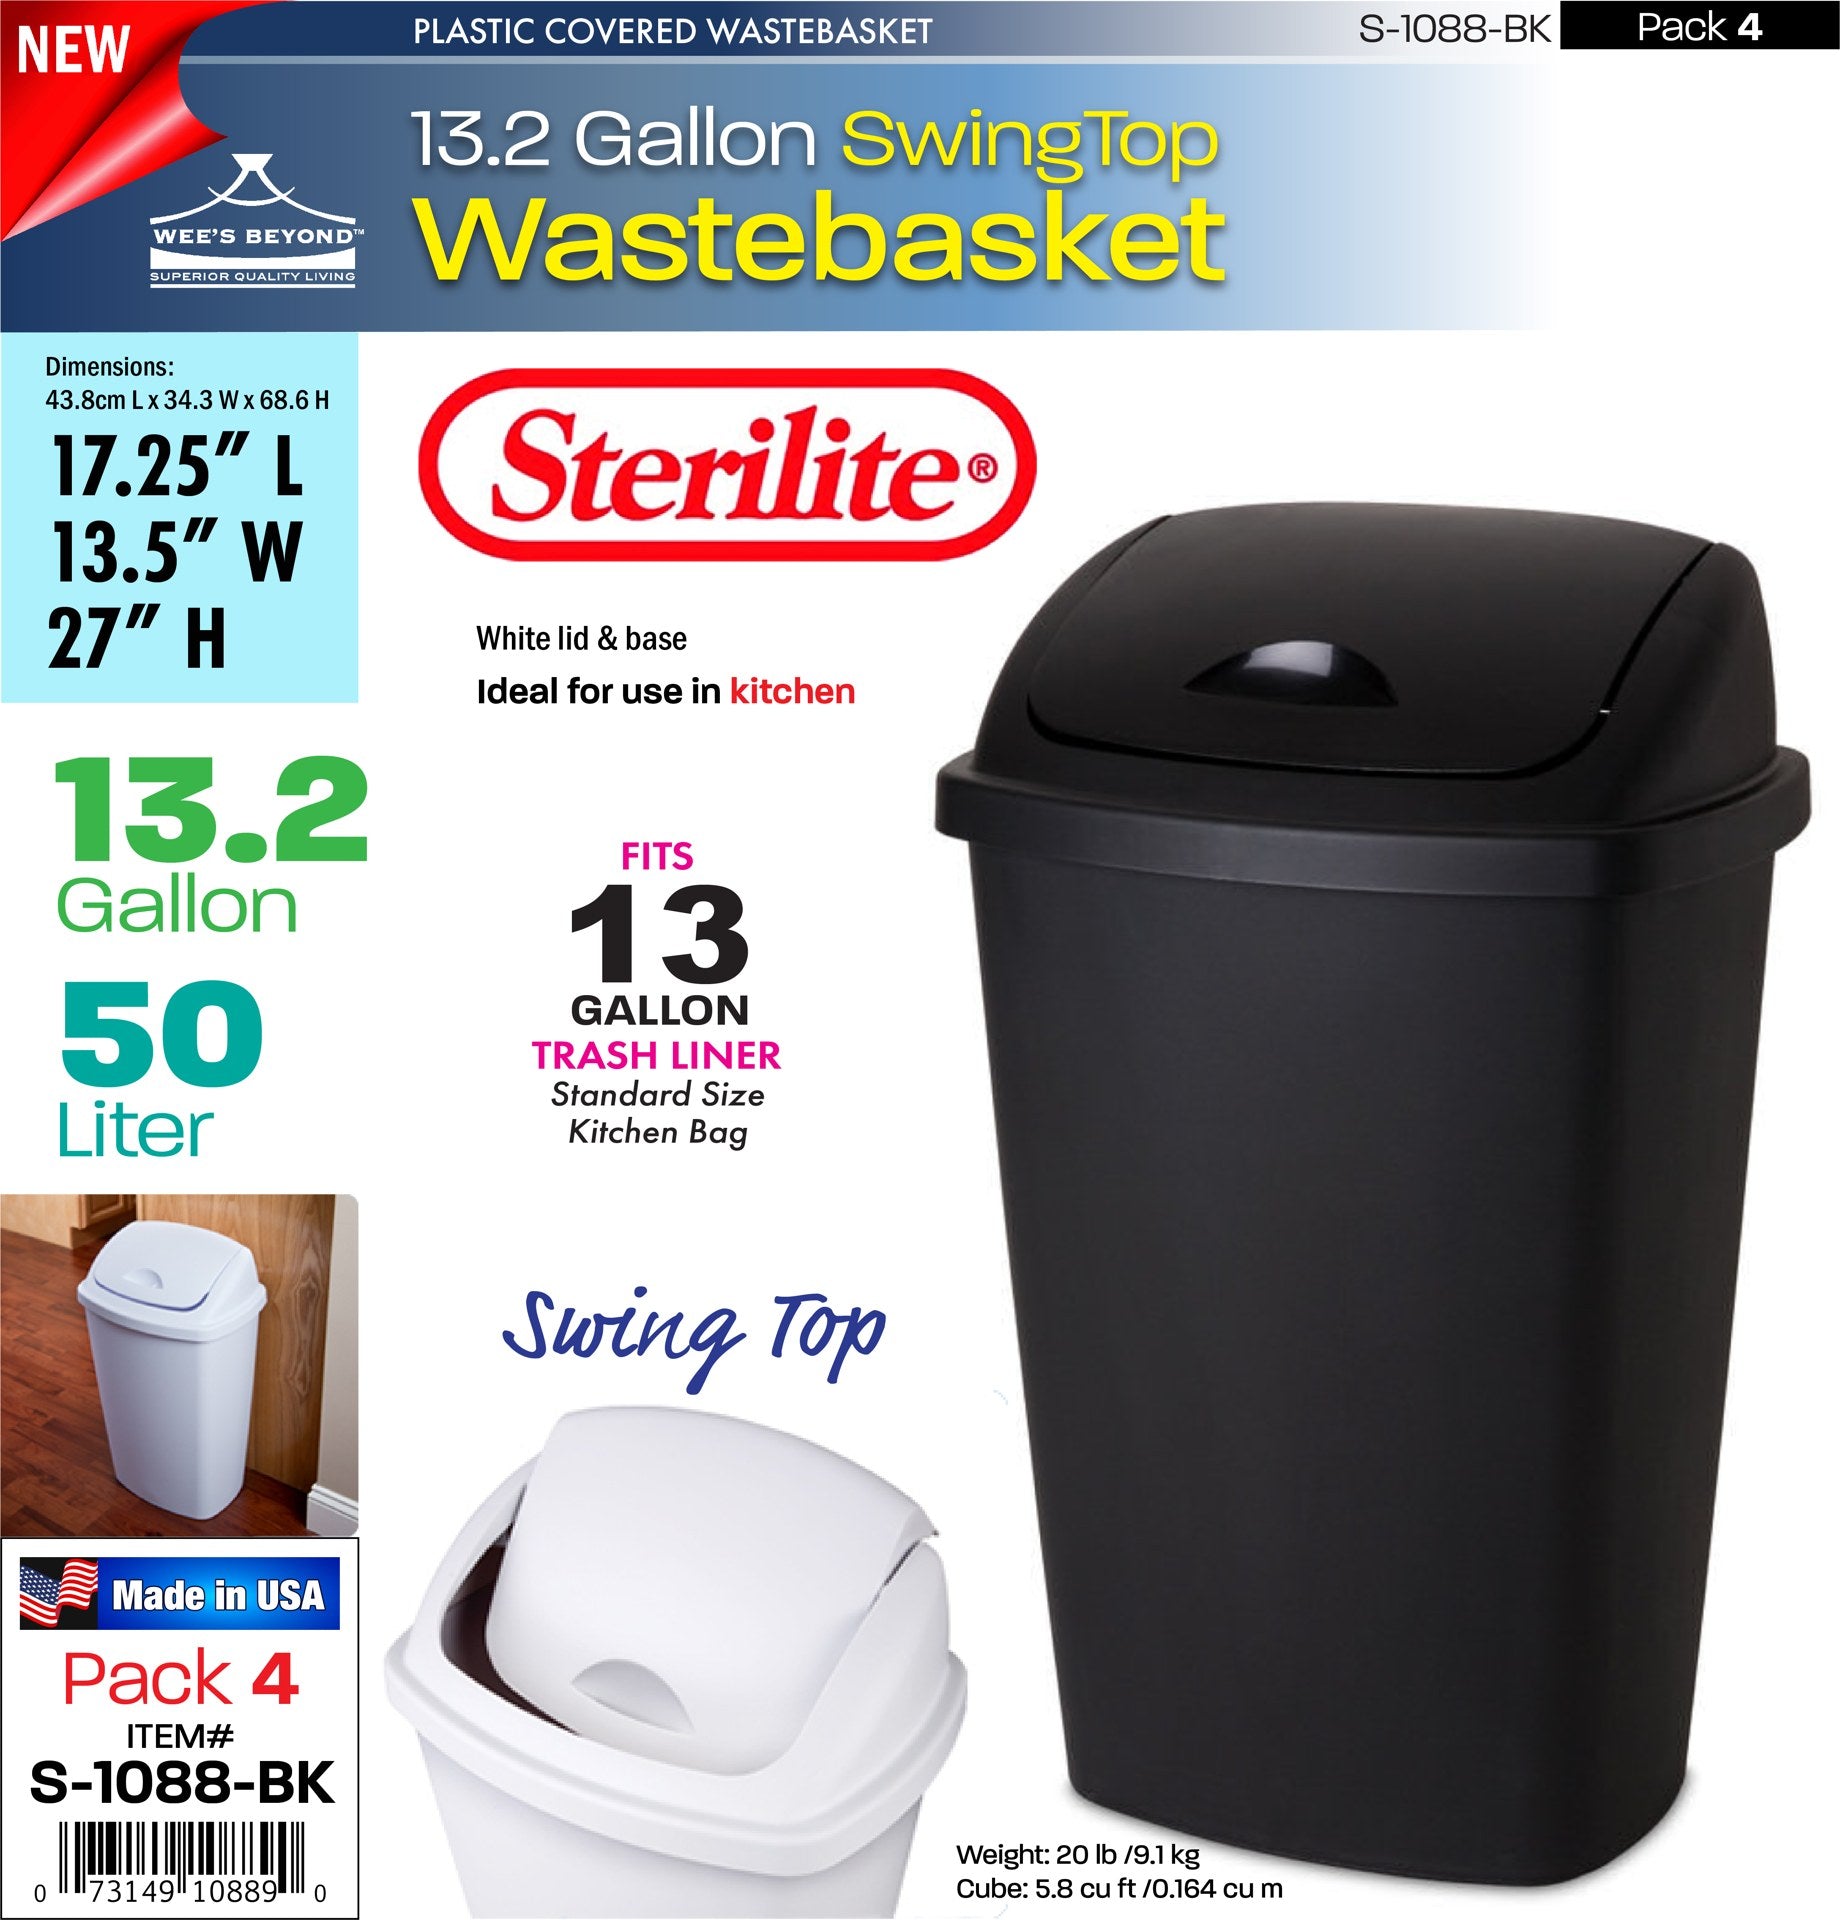 Sterilite Swingtop Wastebasket, Black, 13 gallon